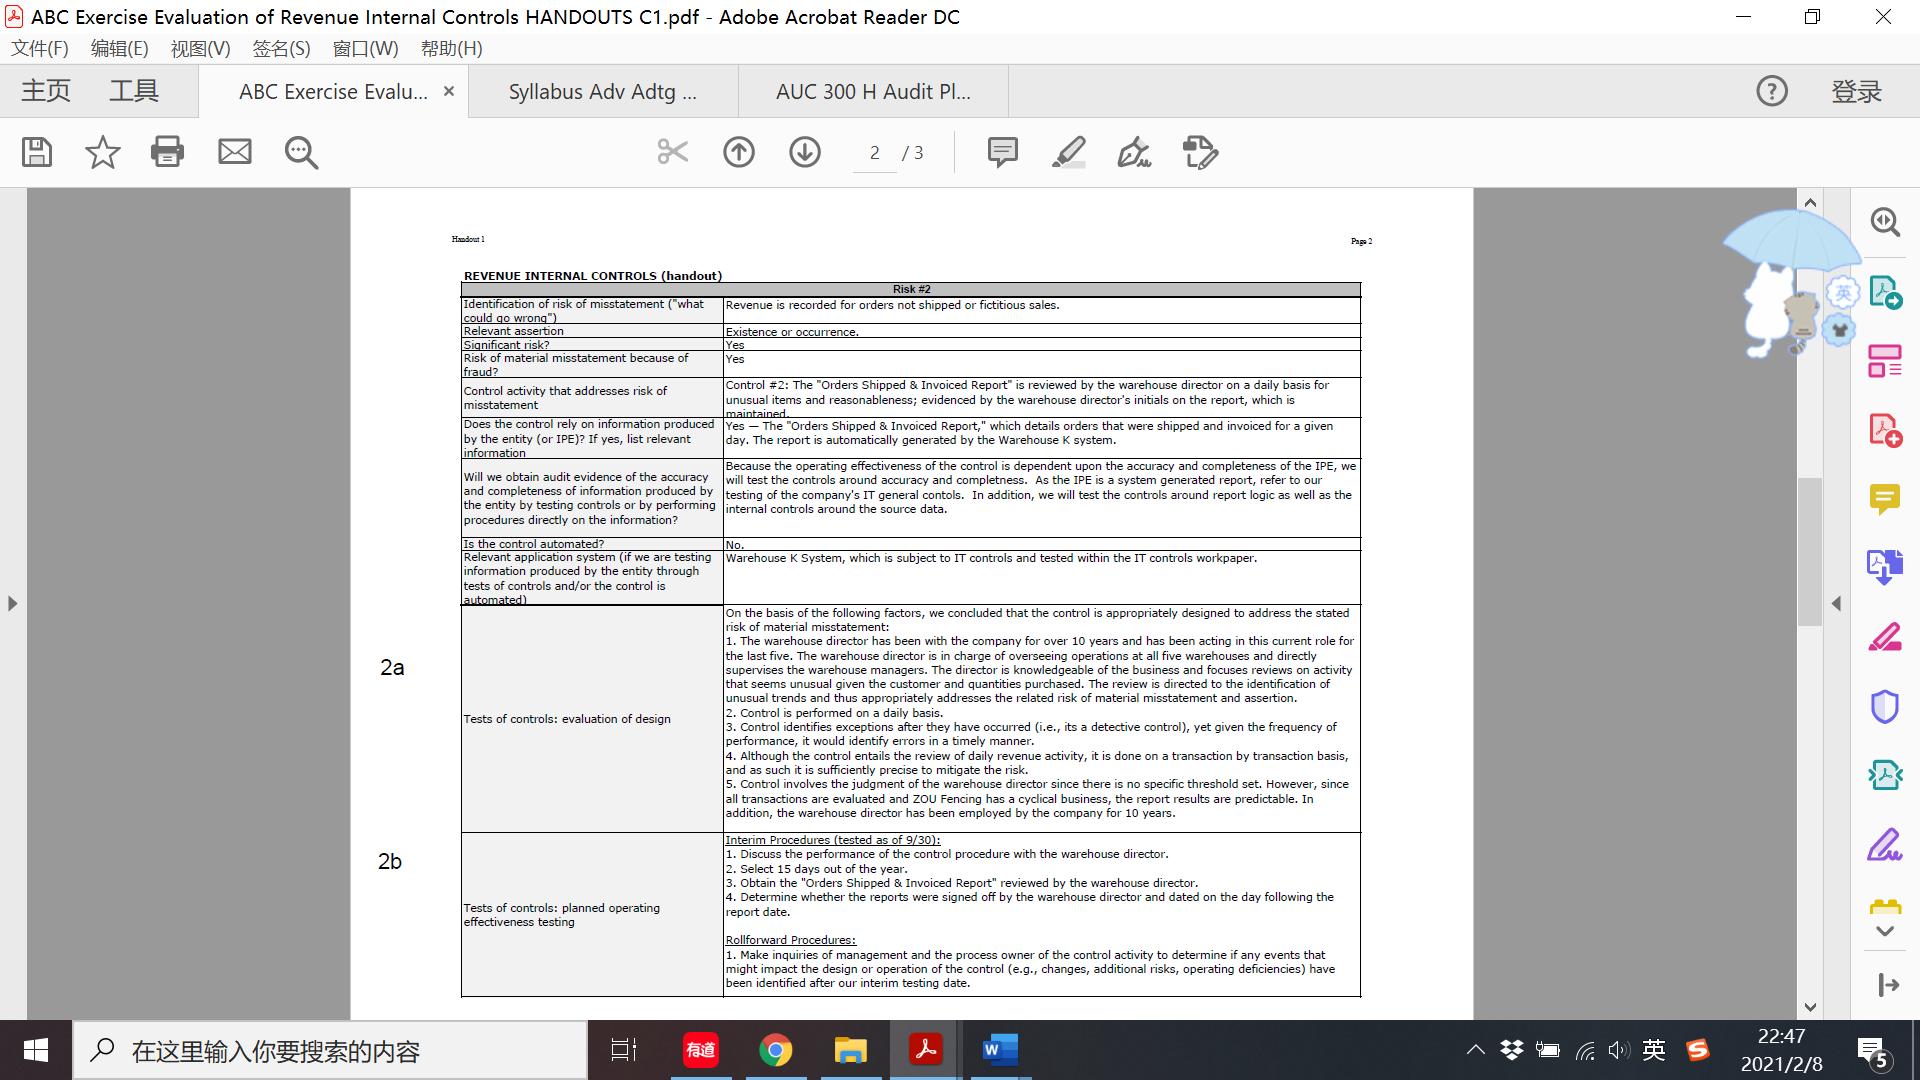 ABC Exercise Evaluation of Revenue Internal Controls HANDOUTS C1.pdf - Adobe Acrobat Reader DC (F) (E) (V)